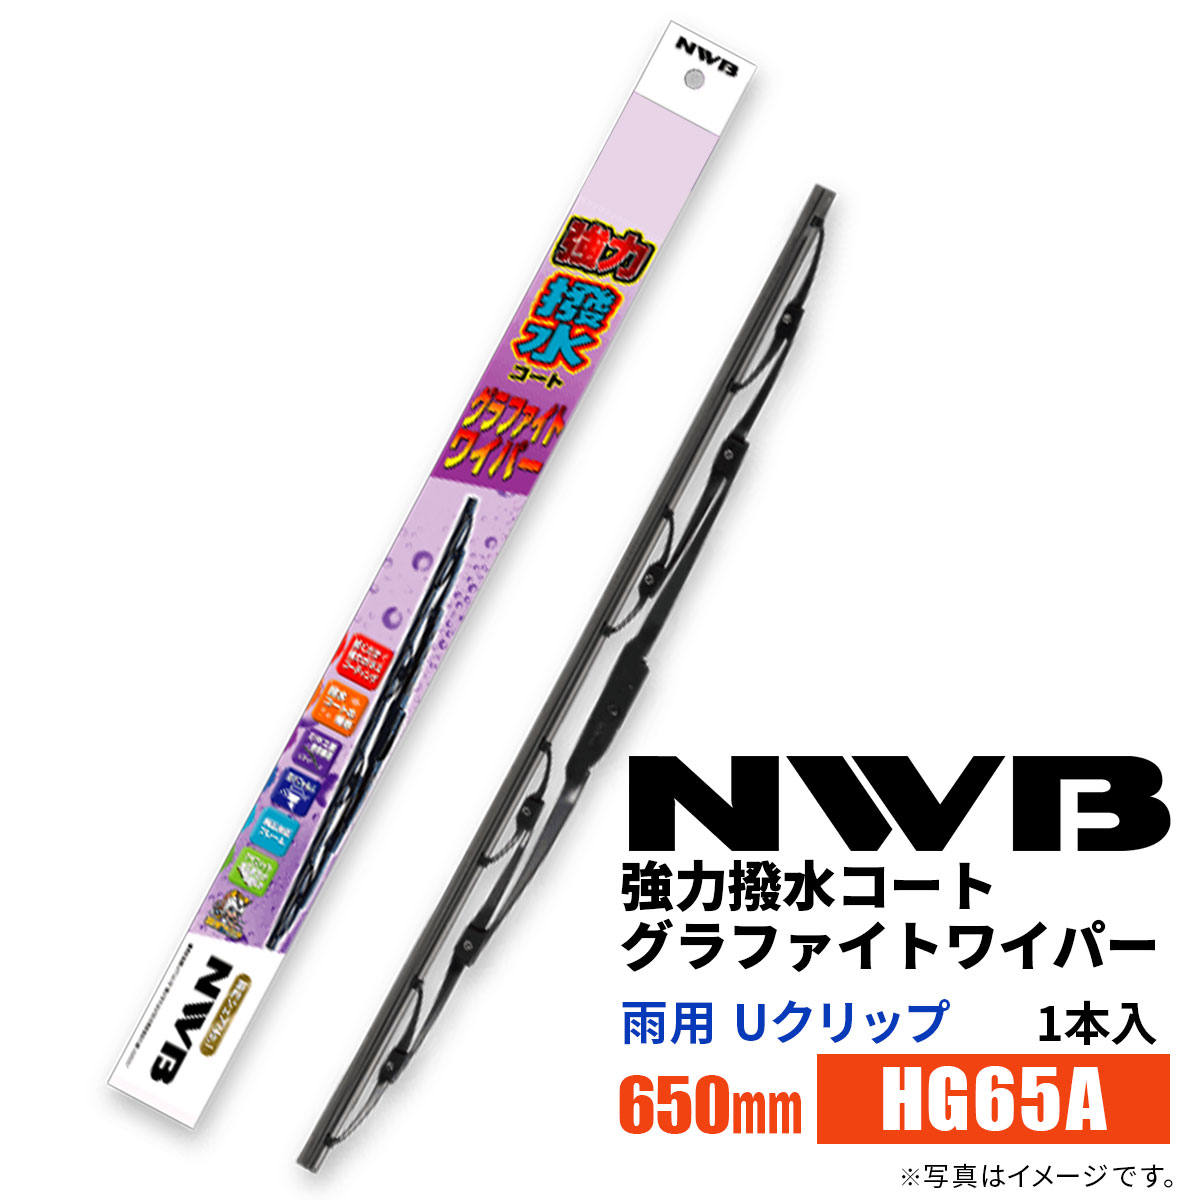 NWB 強力撥水コートグラファイトワイパー HG65A 650mm 1本入 雨用ワイパー Uクリップ